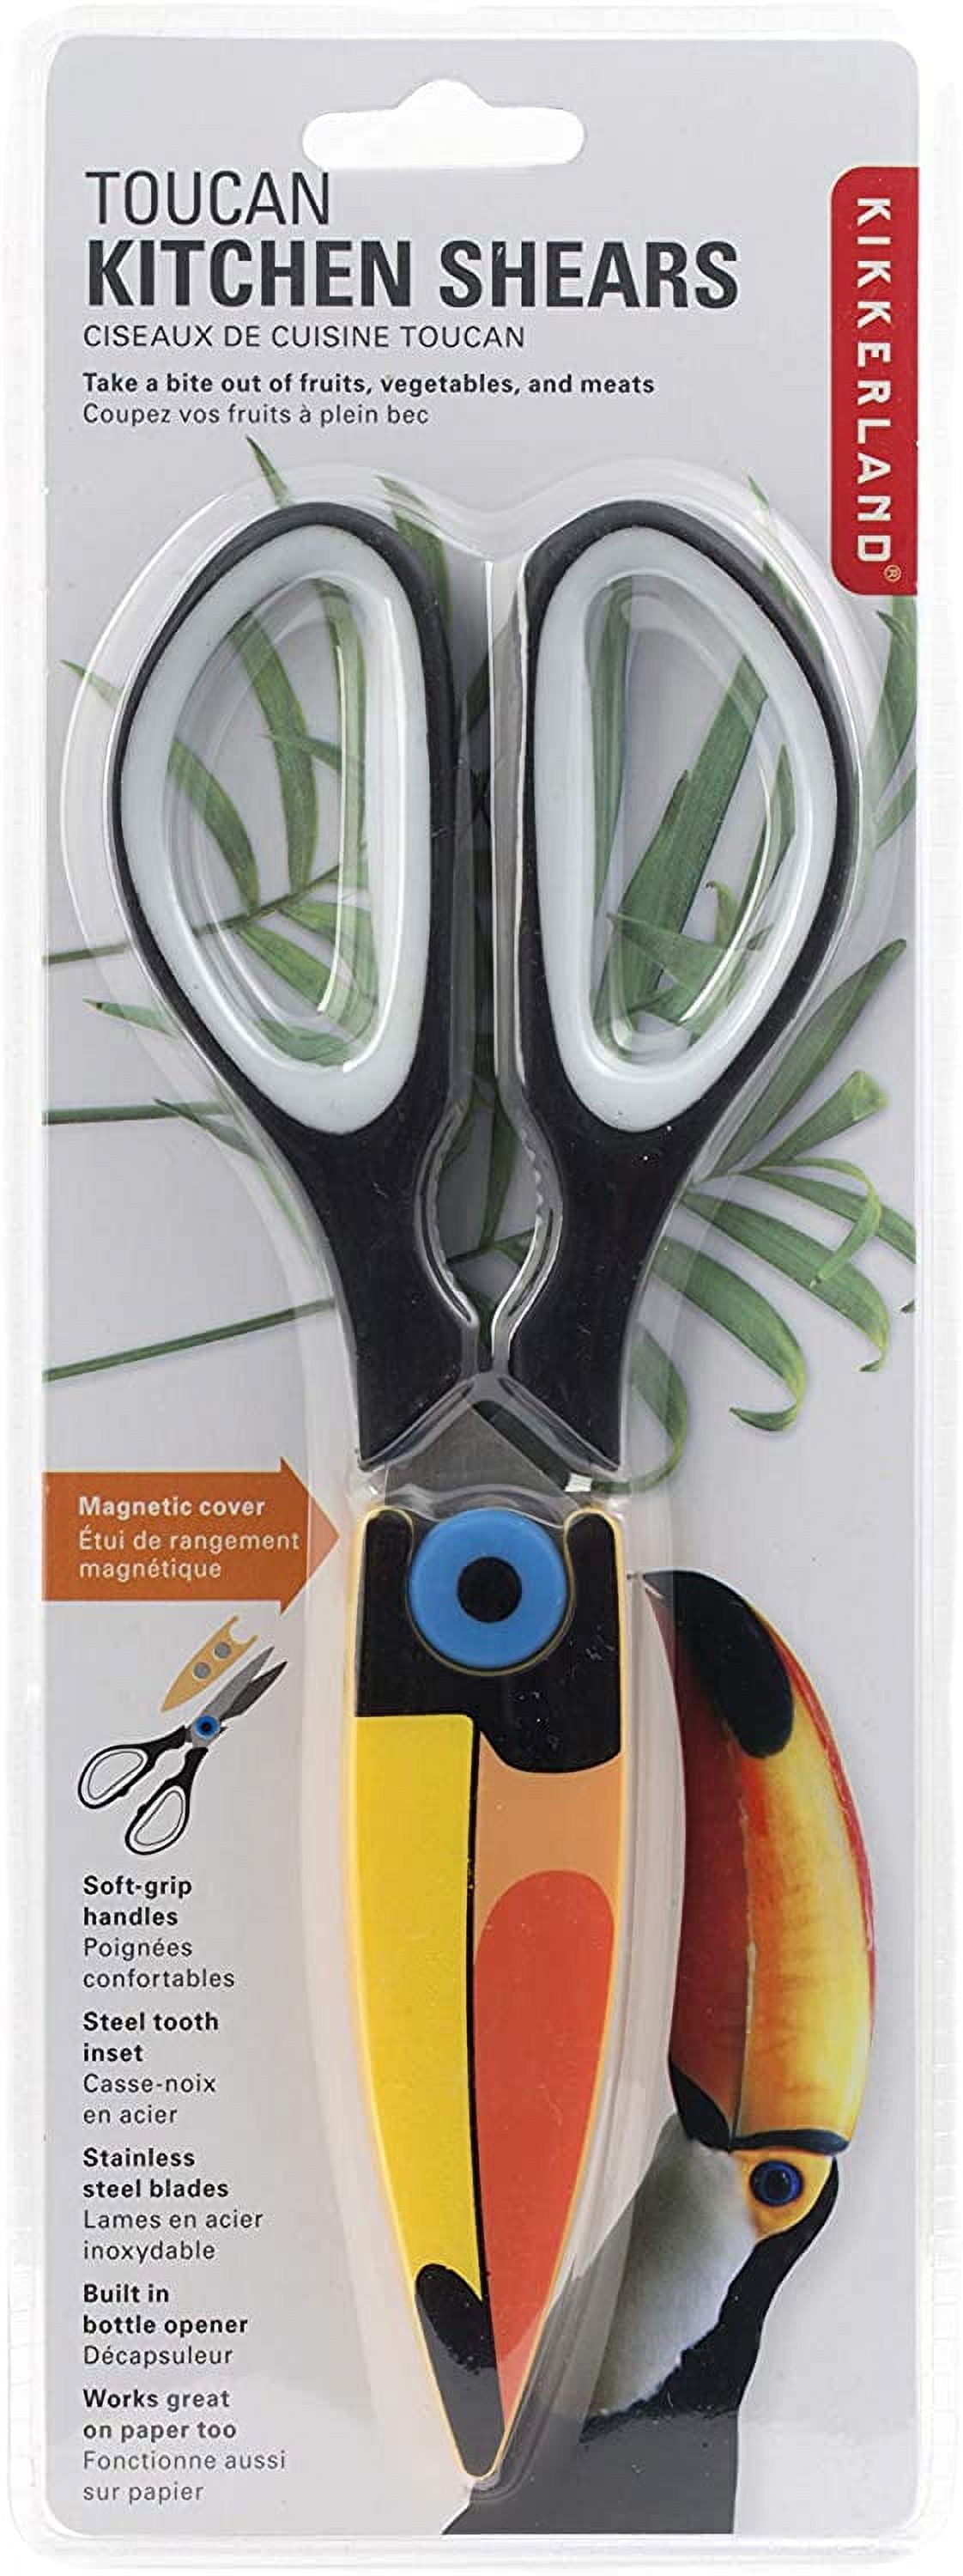 1 Kikkerland Toucan Bird Kitchen Shears Scissors Magnetic Cover Steel Blades